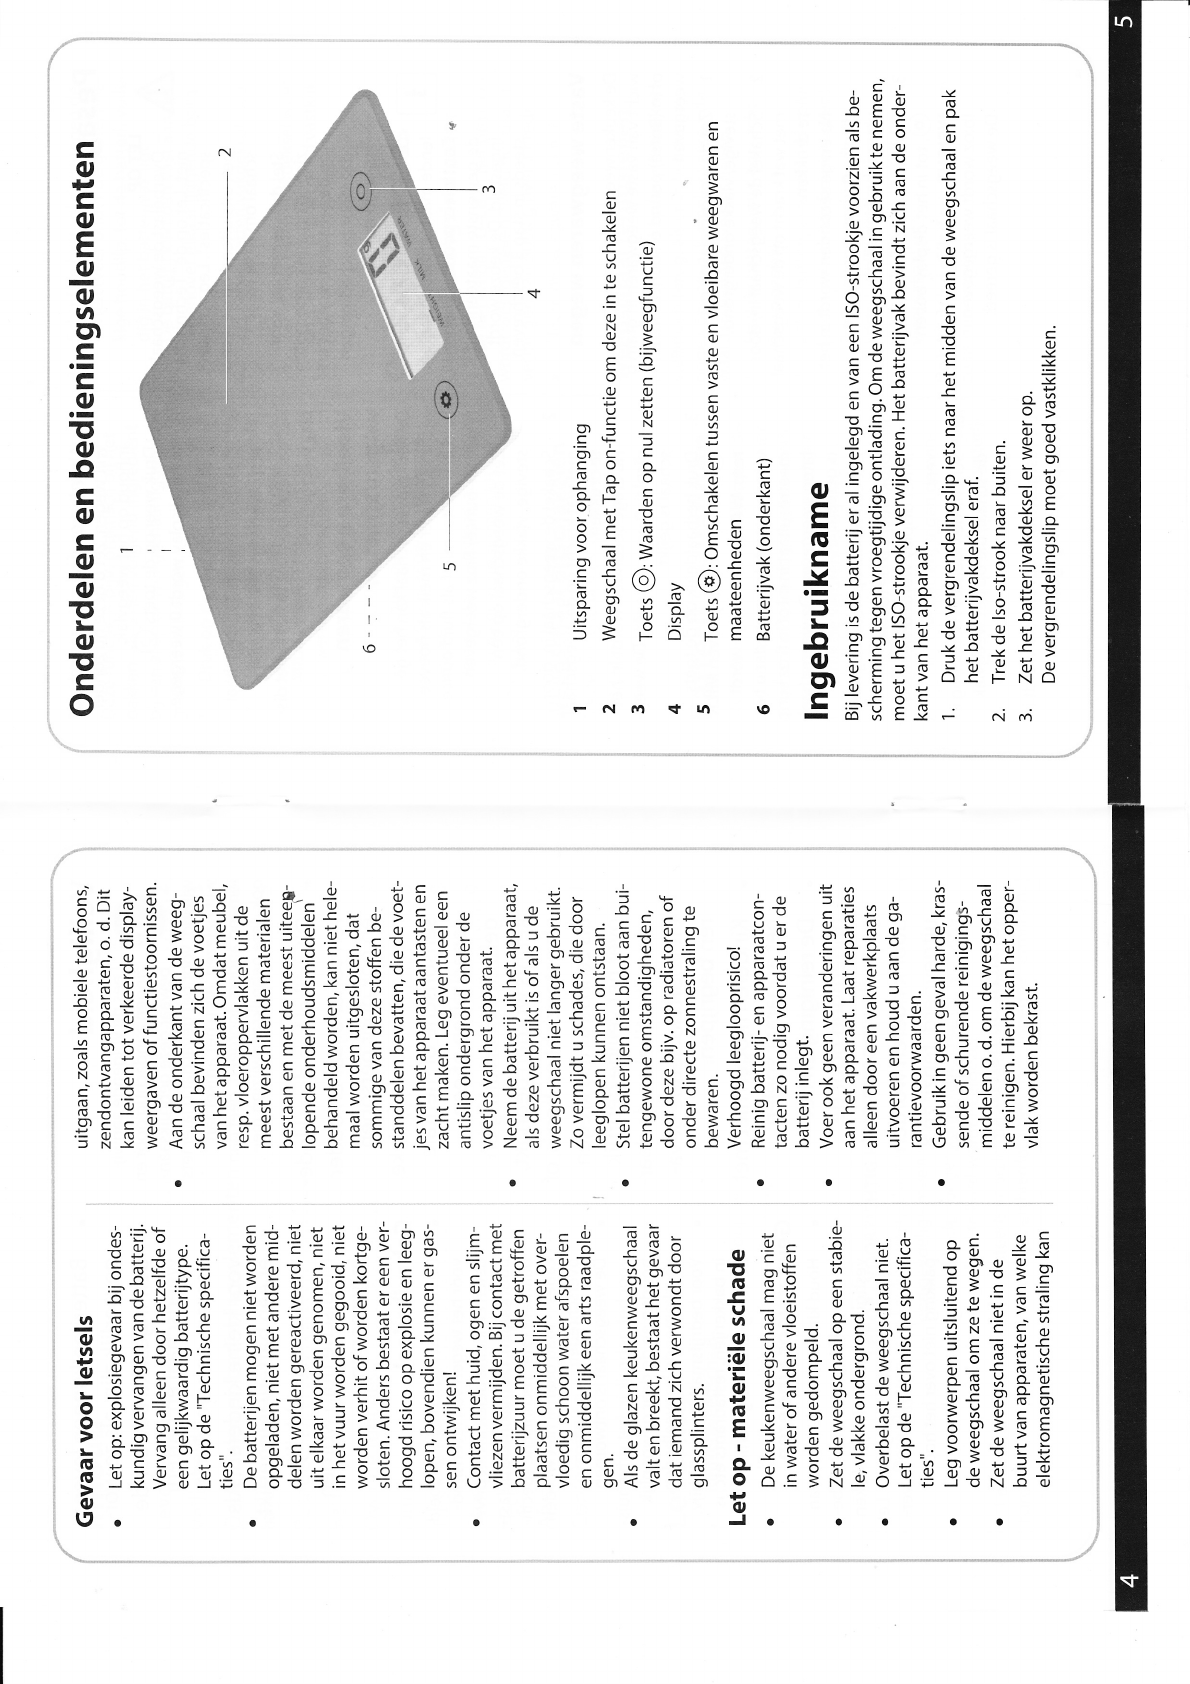 Handleiding Quigg Gt Ksg 07 Pagina 3 Van 6 Nederlands